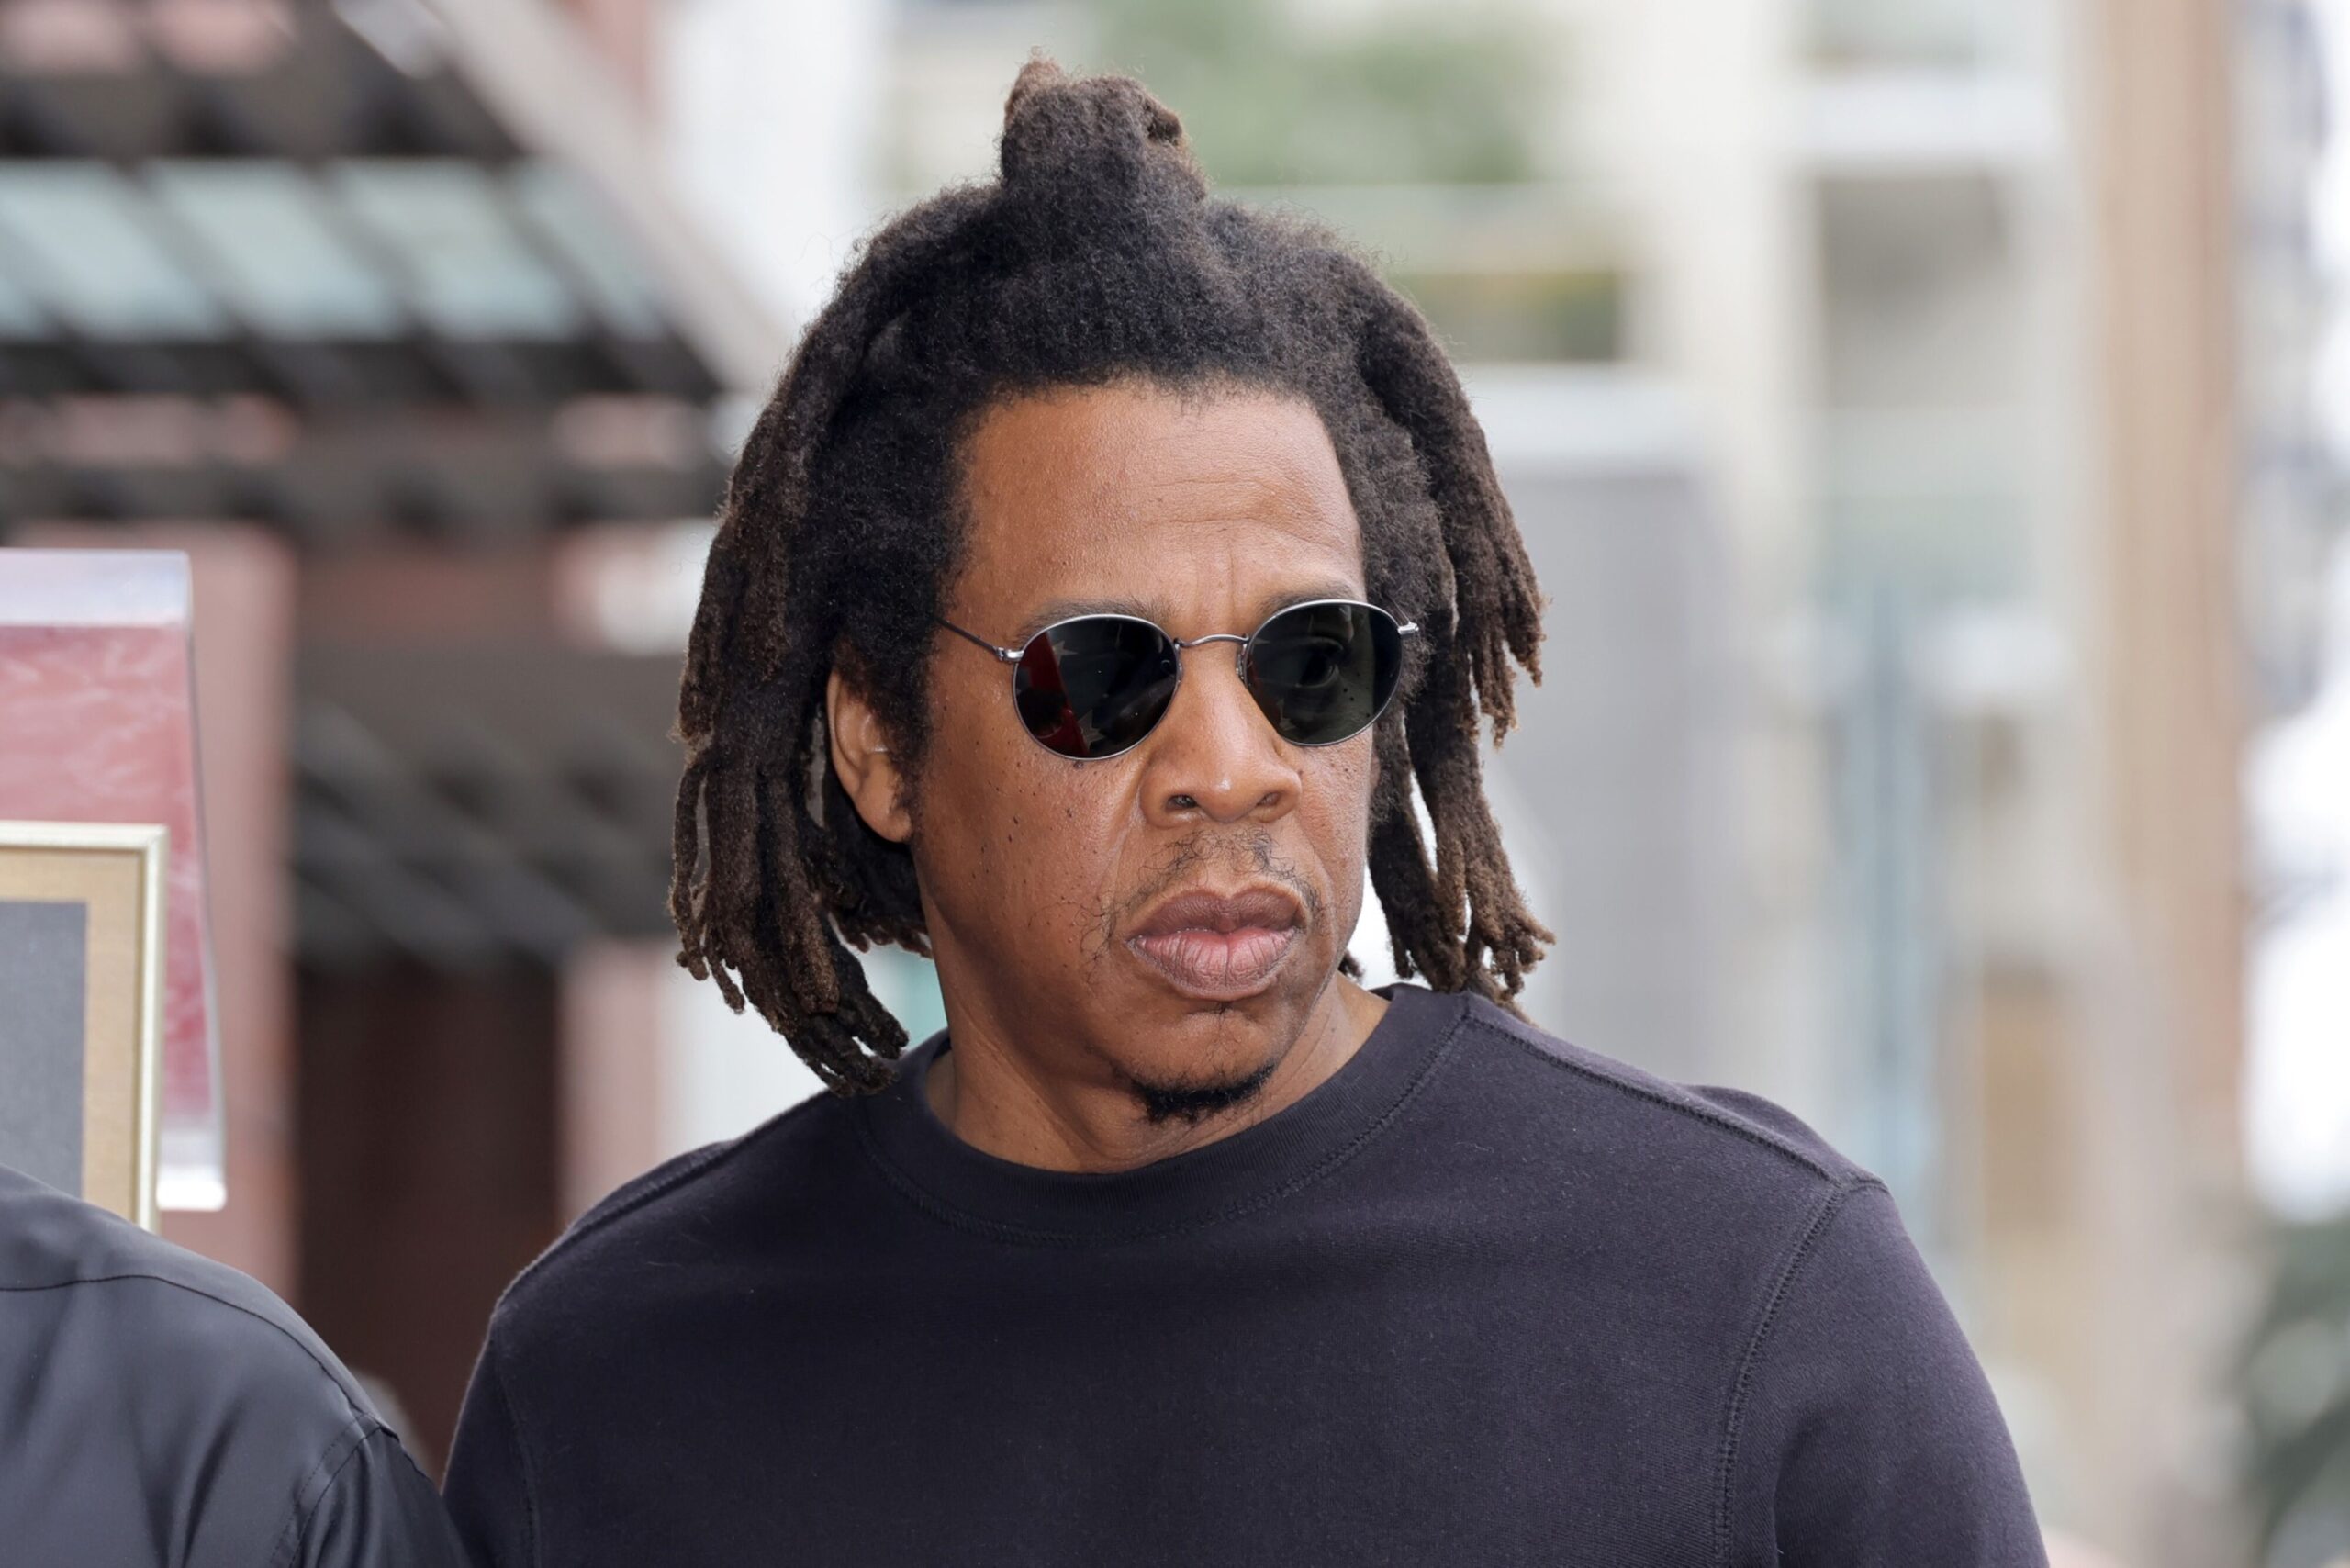 Jay-Z, rap's first billionaire, is now worth $2.5 billion